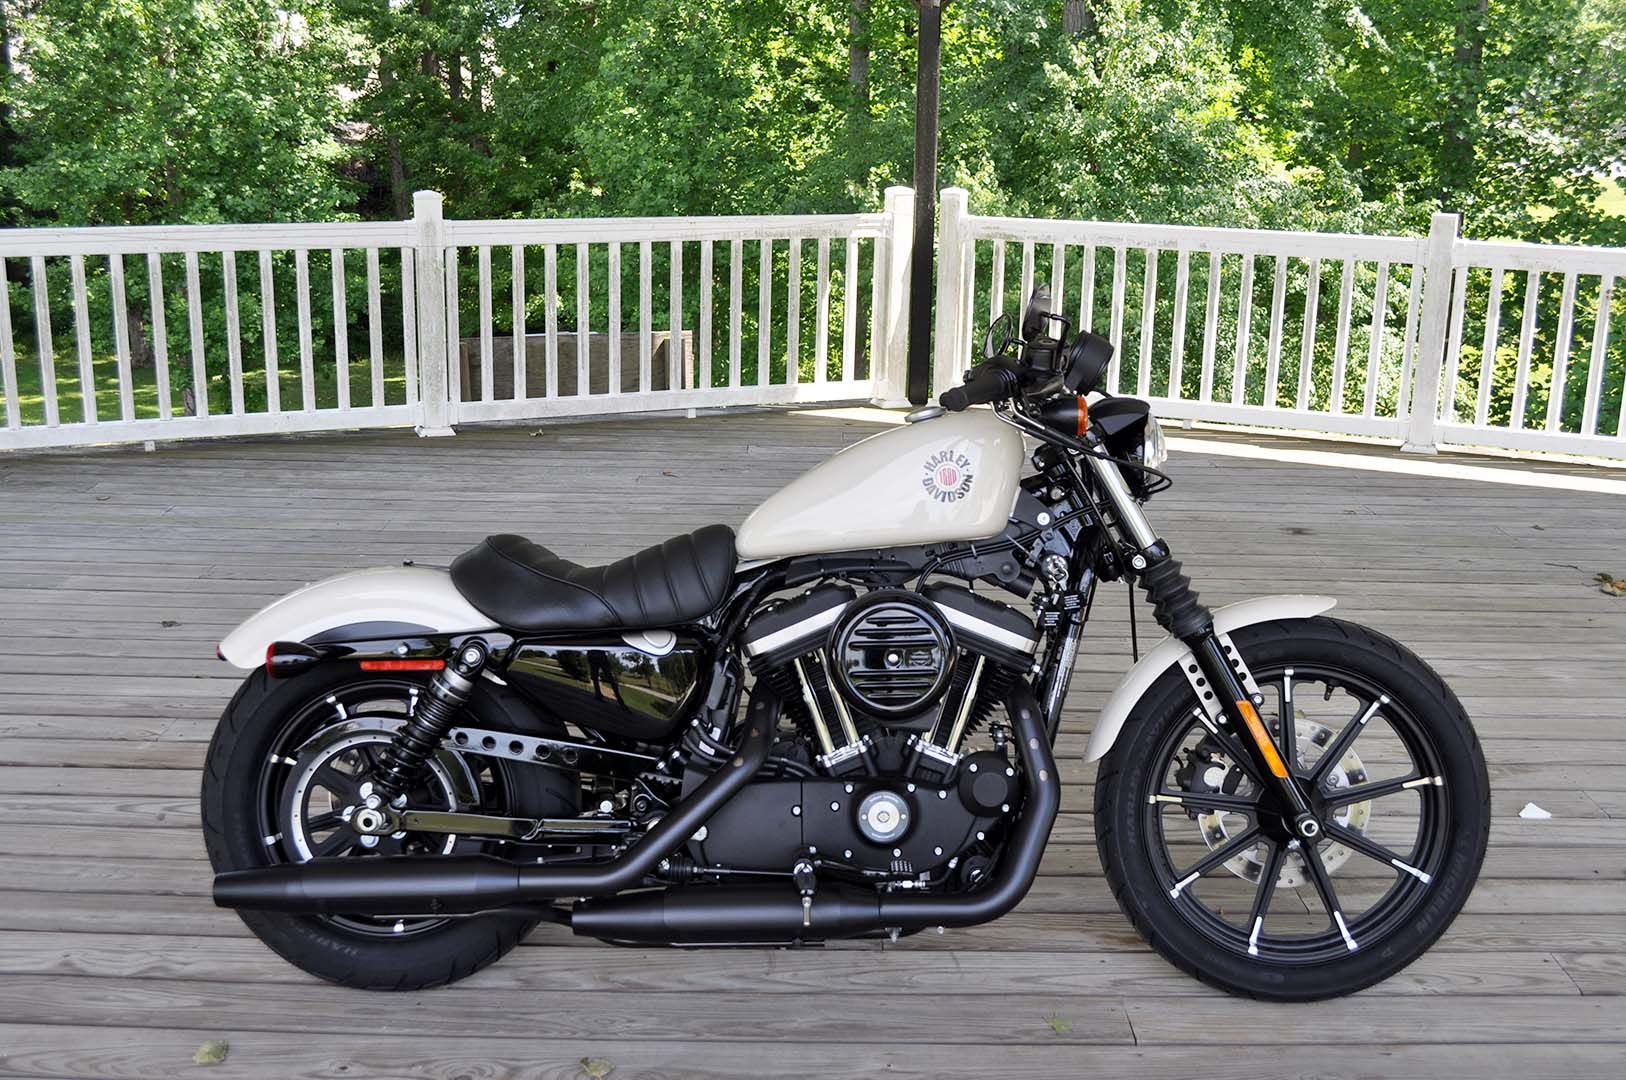 2022 Harley-Davidson Iron 883™ in Winston Salem, North Carolina - Photo 4